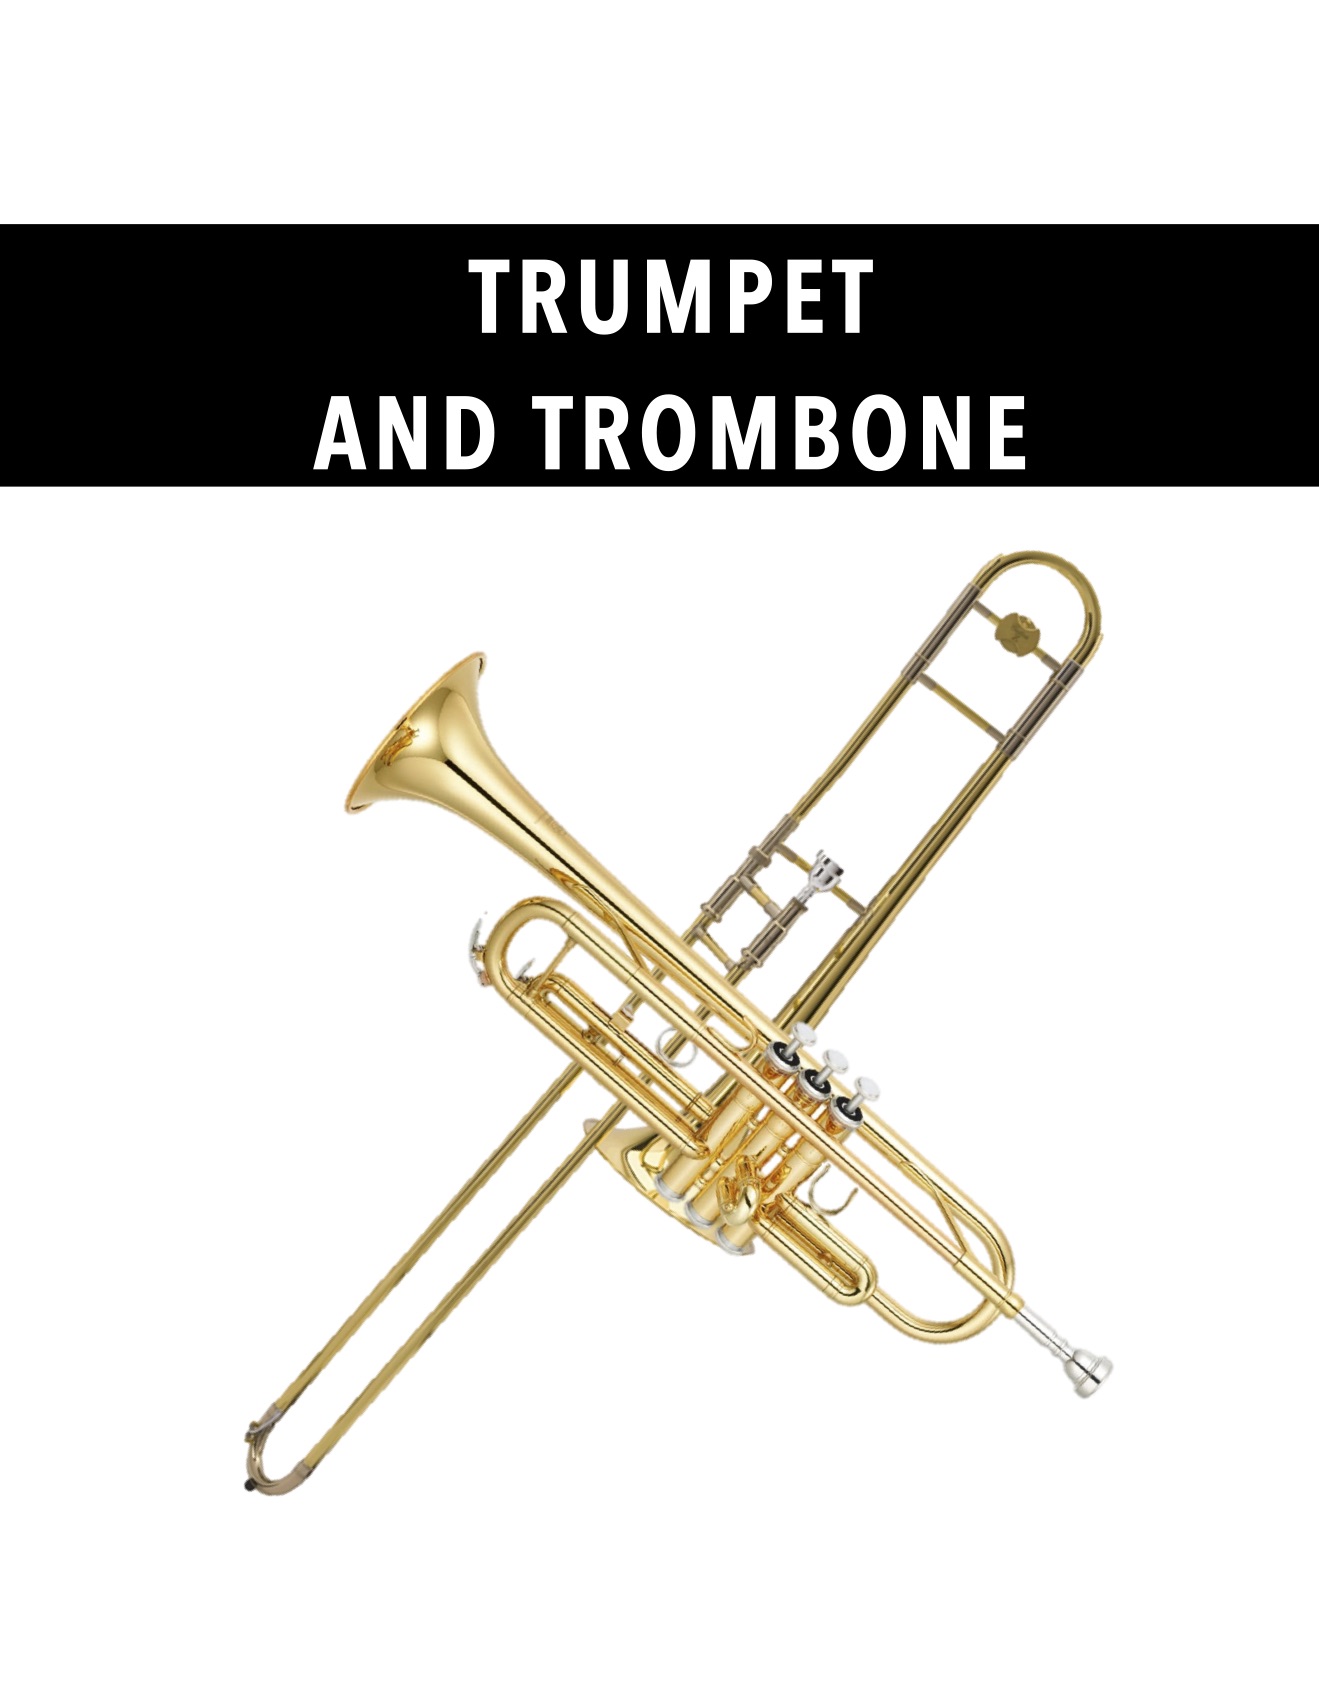 Trumpet and Trombone.